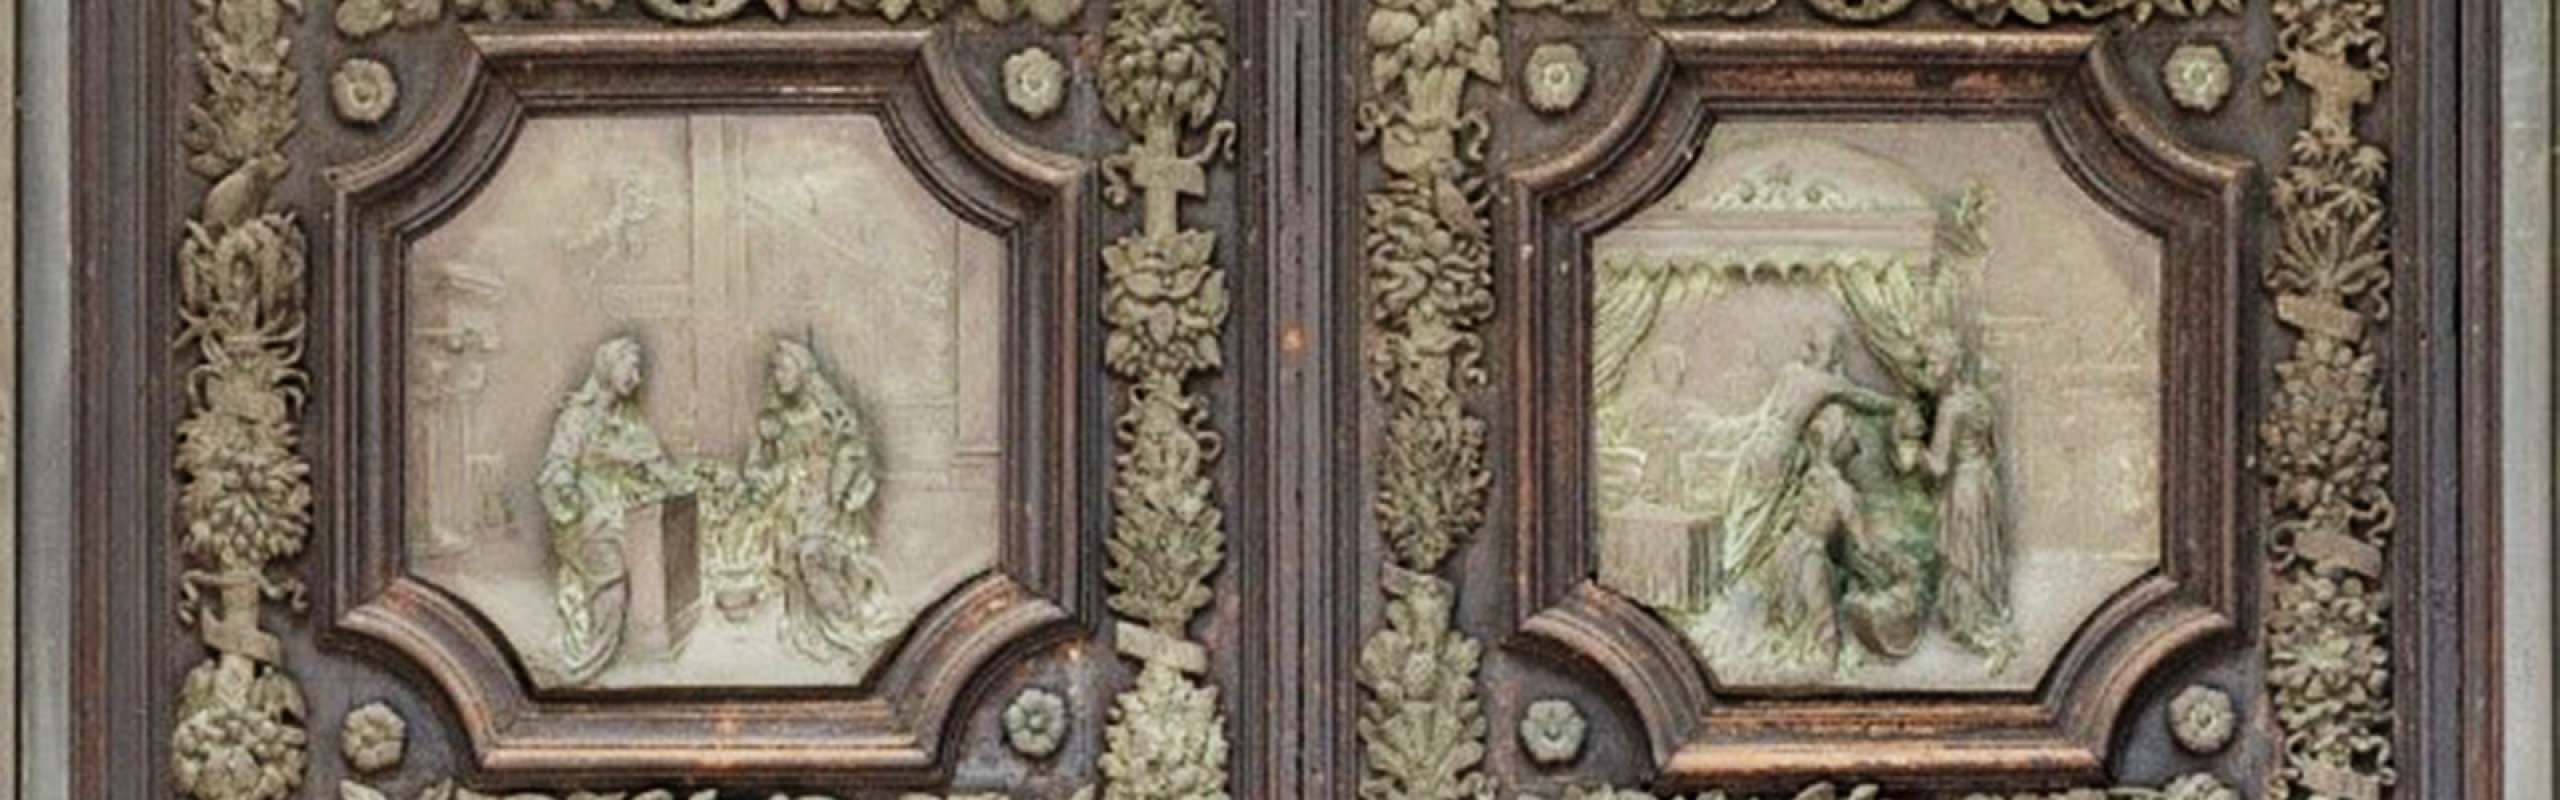 From Florence to South Kensington to New York: J. Pierpont Morgan’s bronze doors